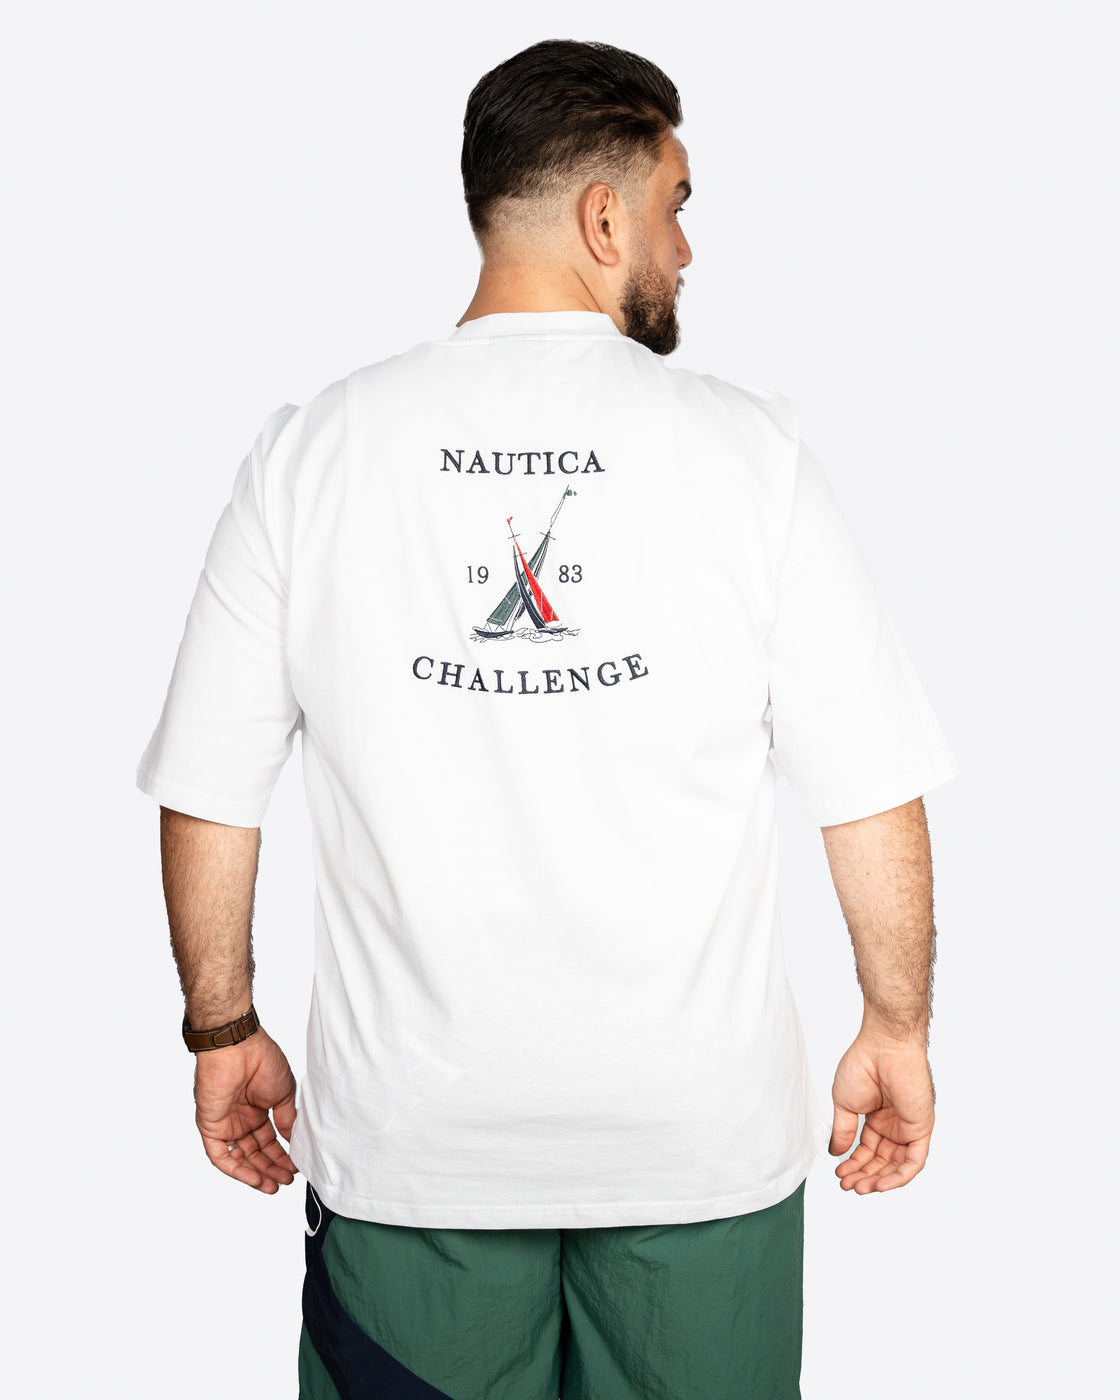 Nautica Challenge Embroided Crew Neck T-Shirt